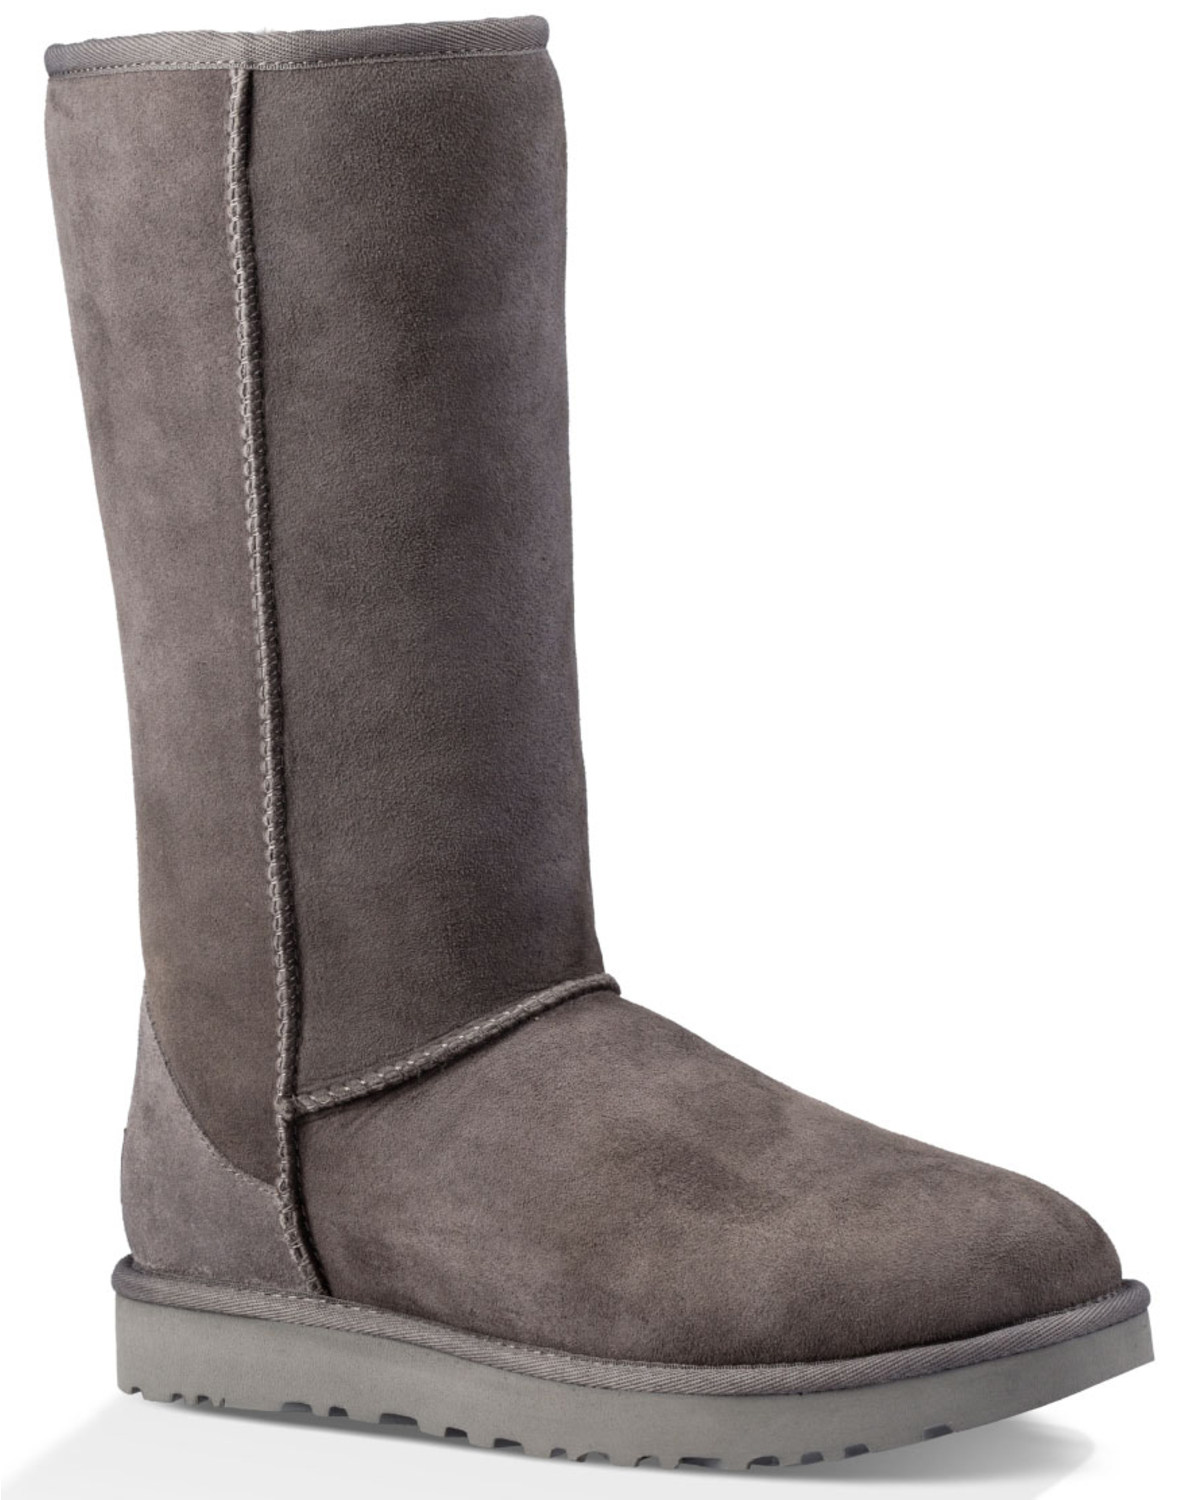 grey tall ugg boots